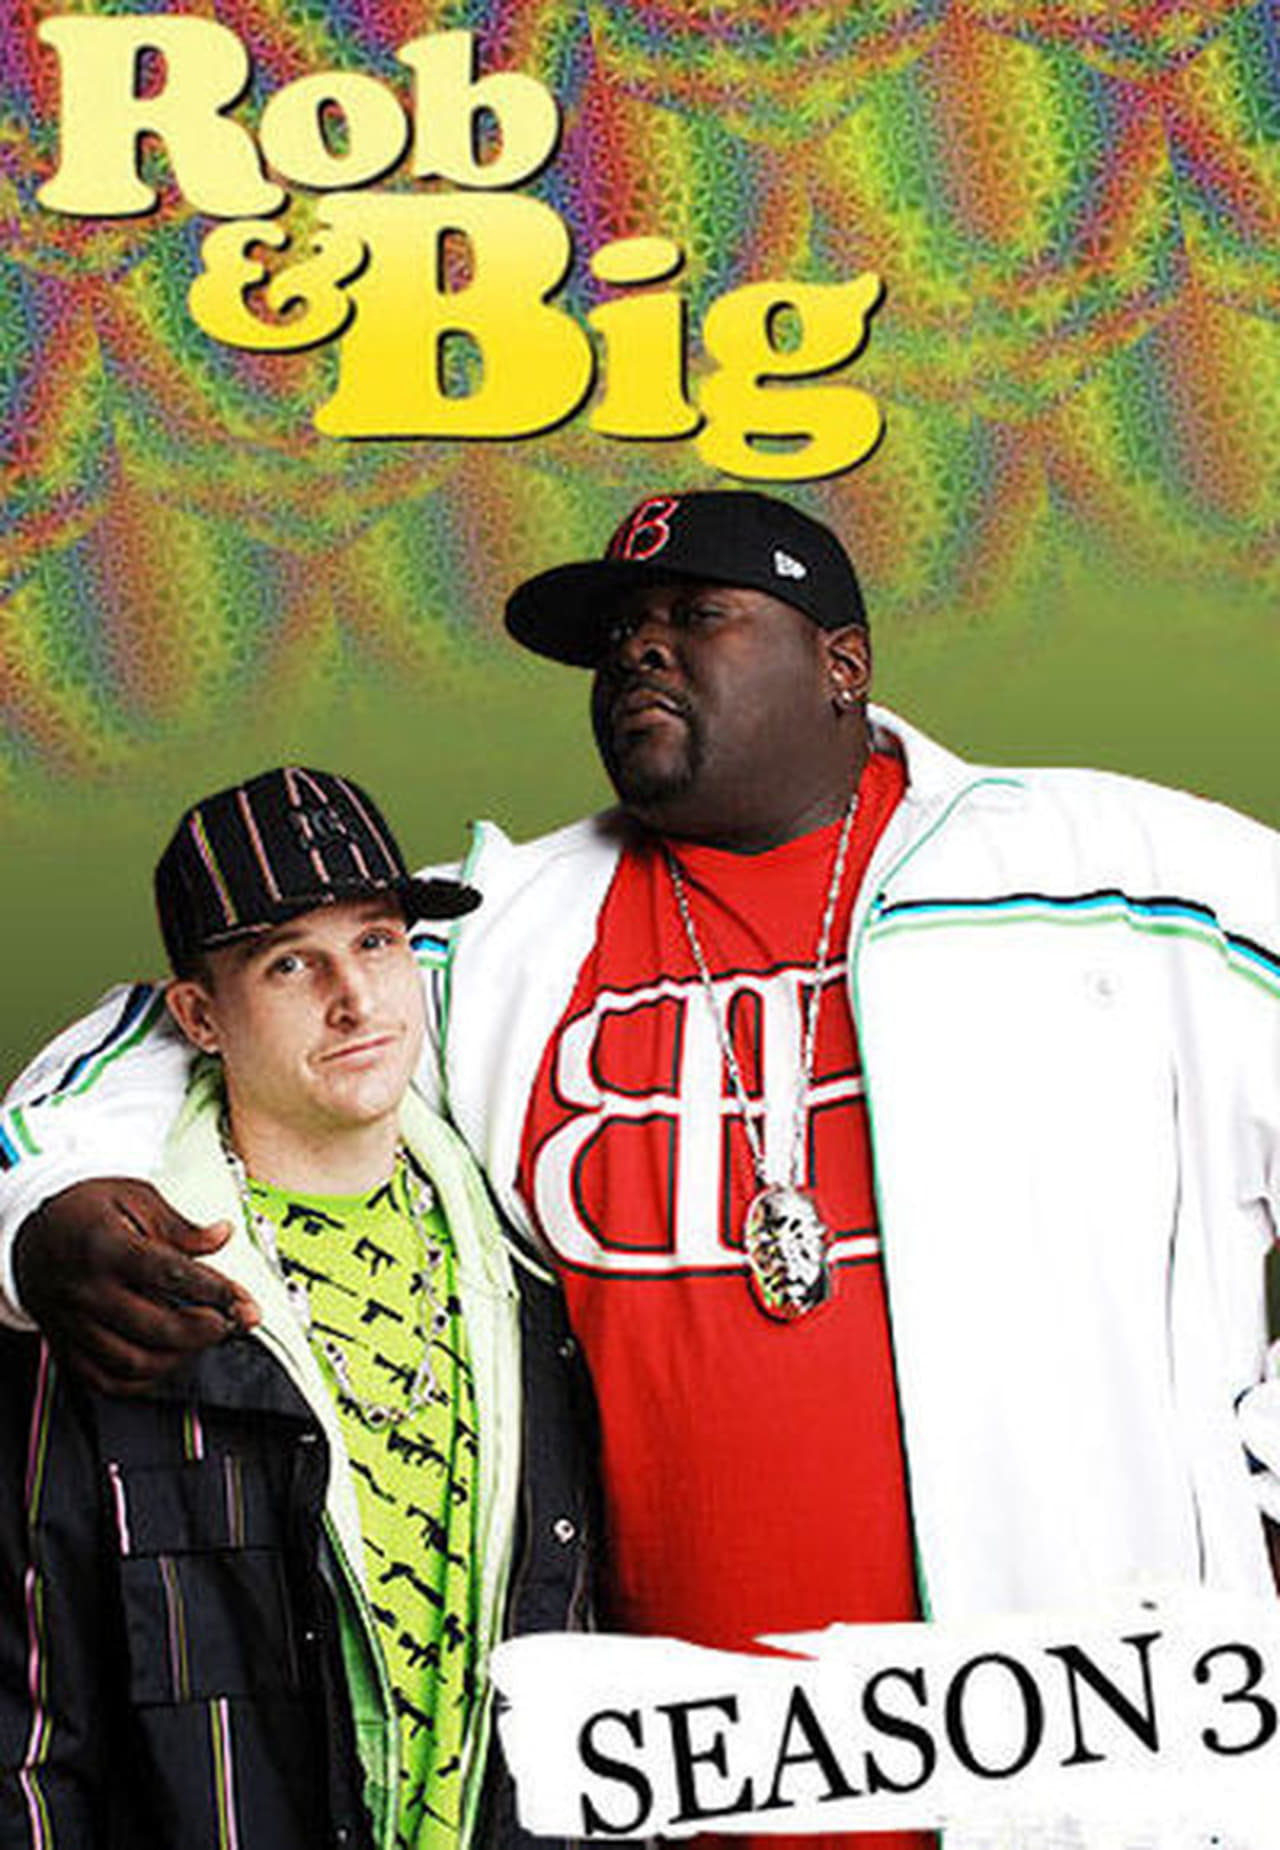 Rob & Big (2008)